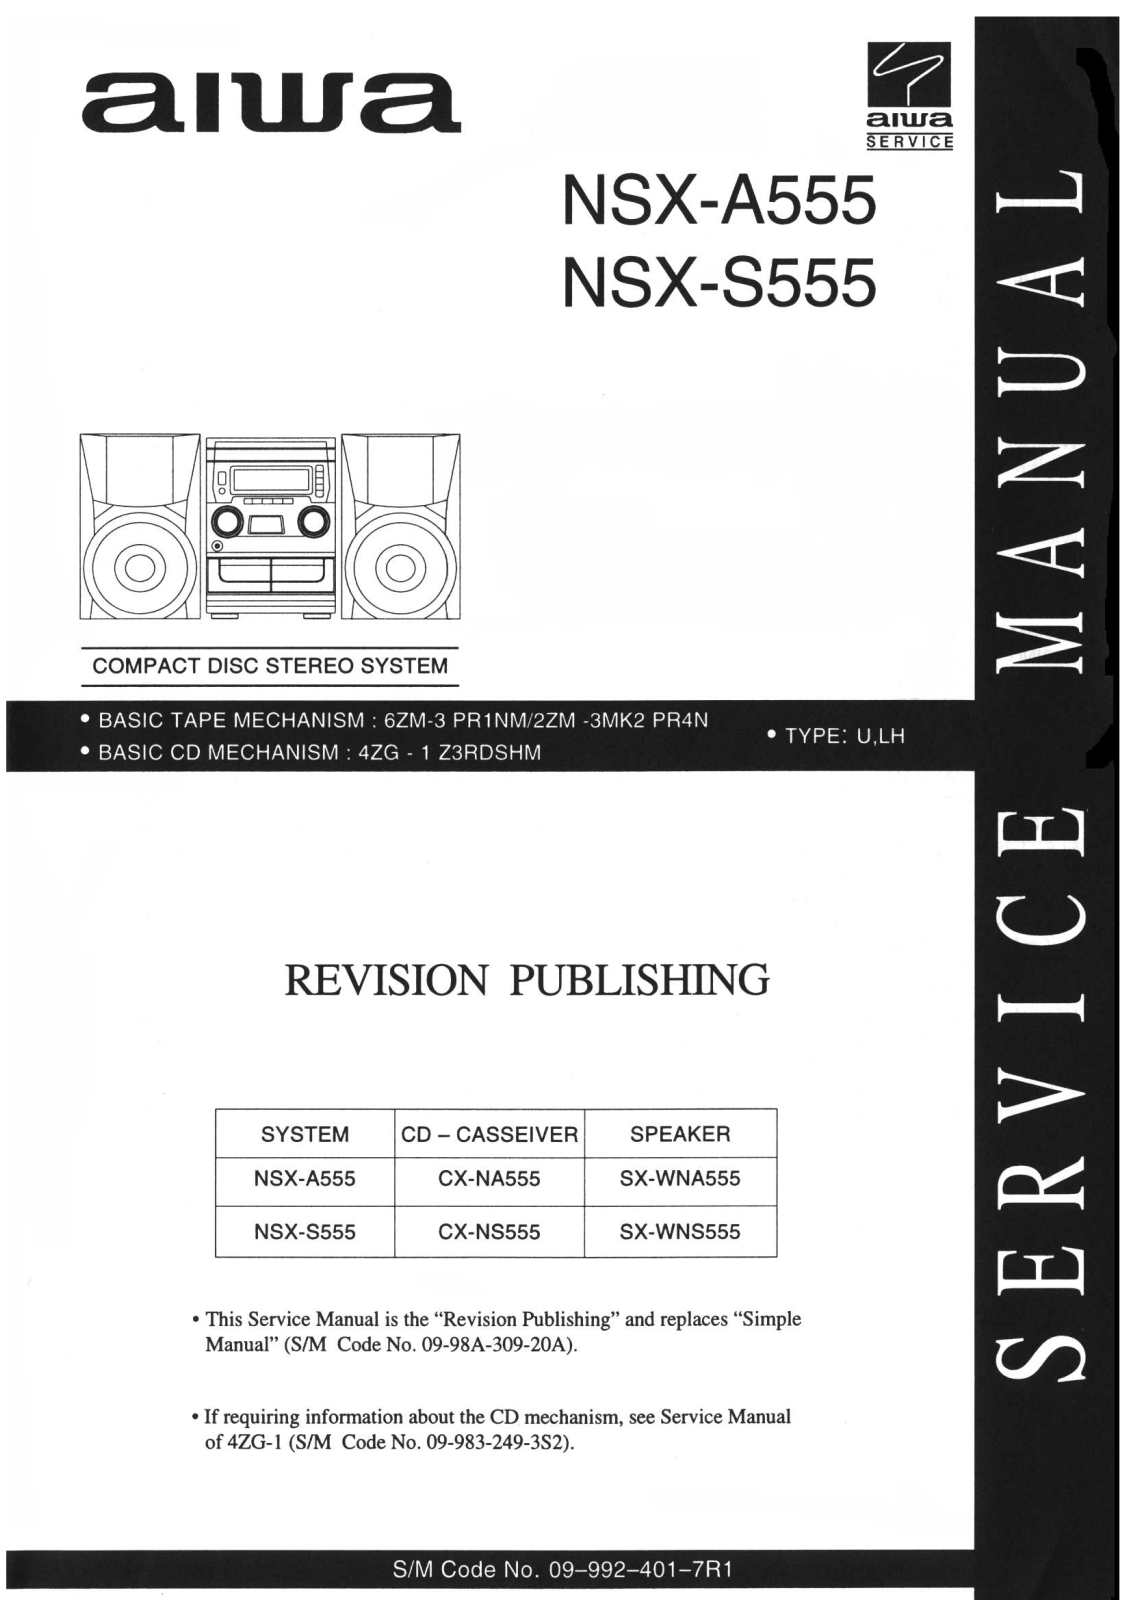 Aiwa NSX-A555, NSX-S555 Service Manual